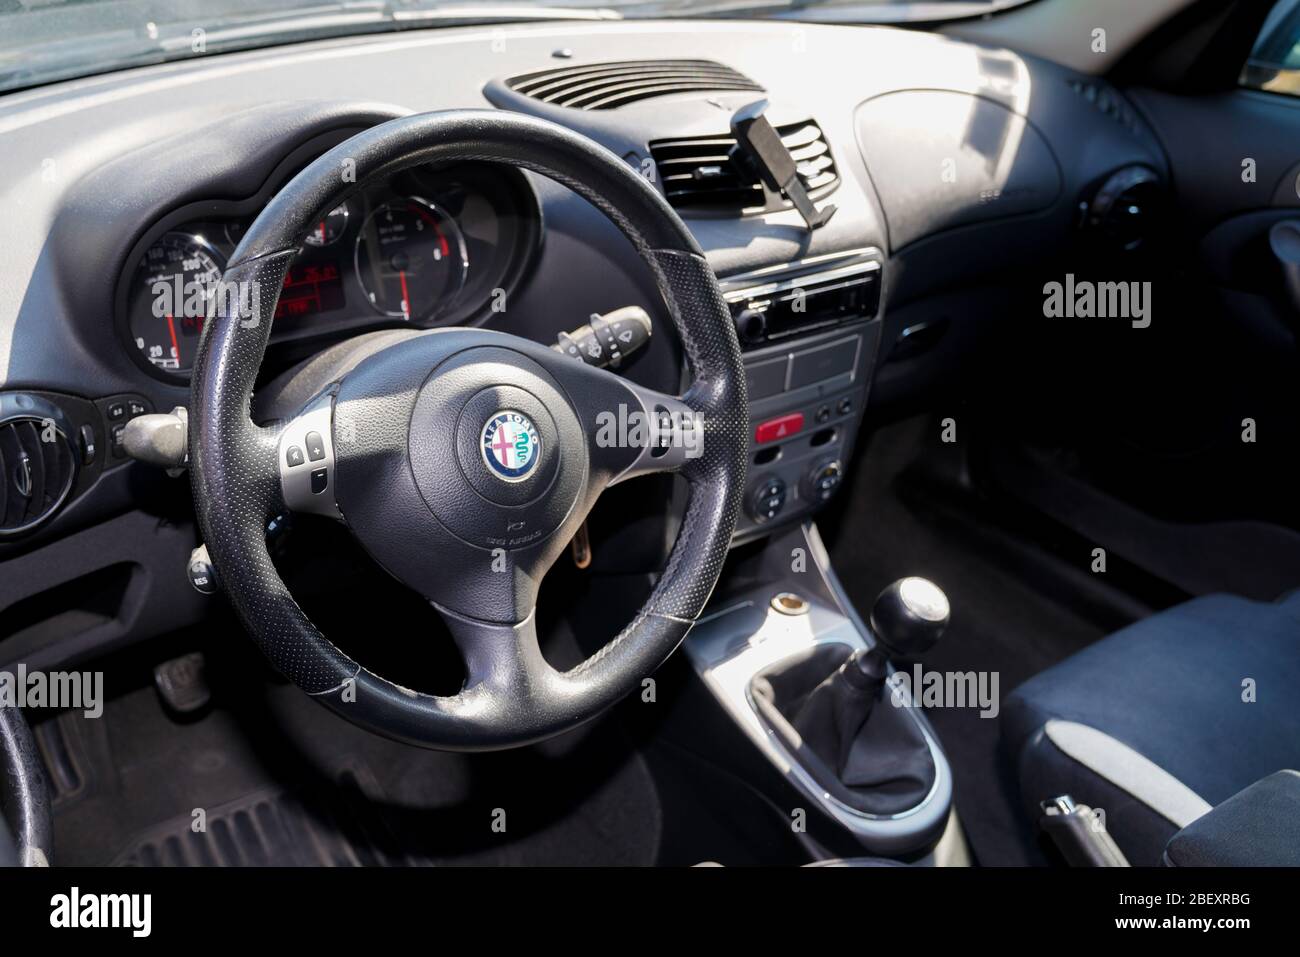 Bordeaux , Aquitaine / France - 03 20 2020 : alfa romeo interior of 147 sports car Stock Photo